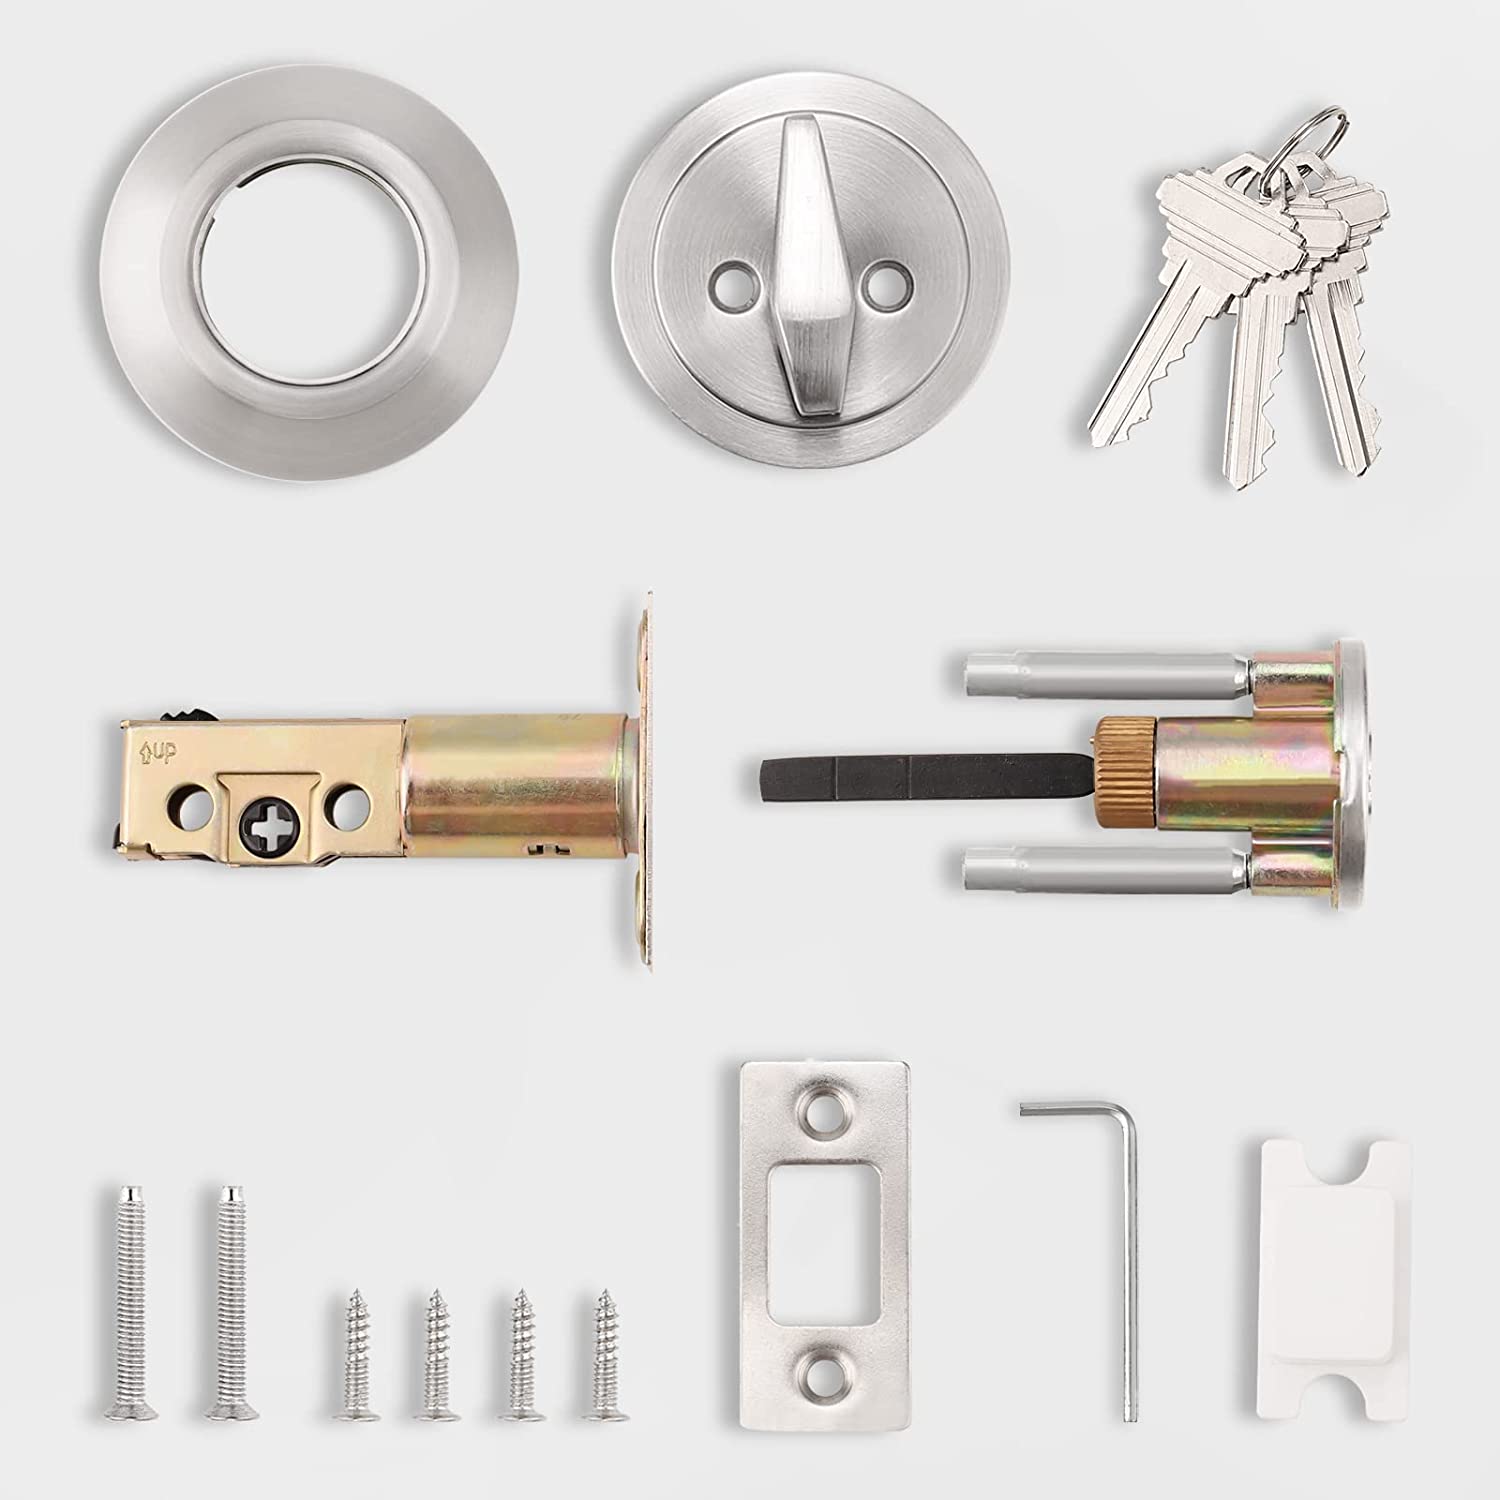 Single Cylinder Deadbolt Lock with Same Key, Oil Rubbed Bronze/Satin Nickel Keyed Door Lock DLD101